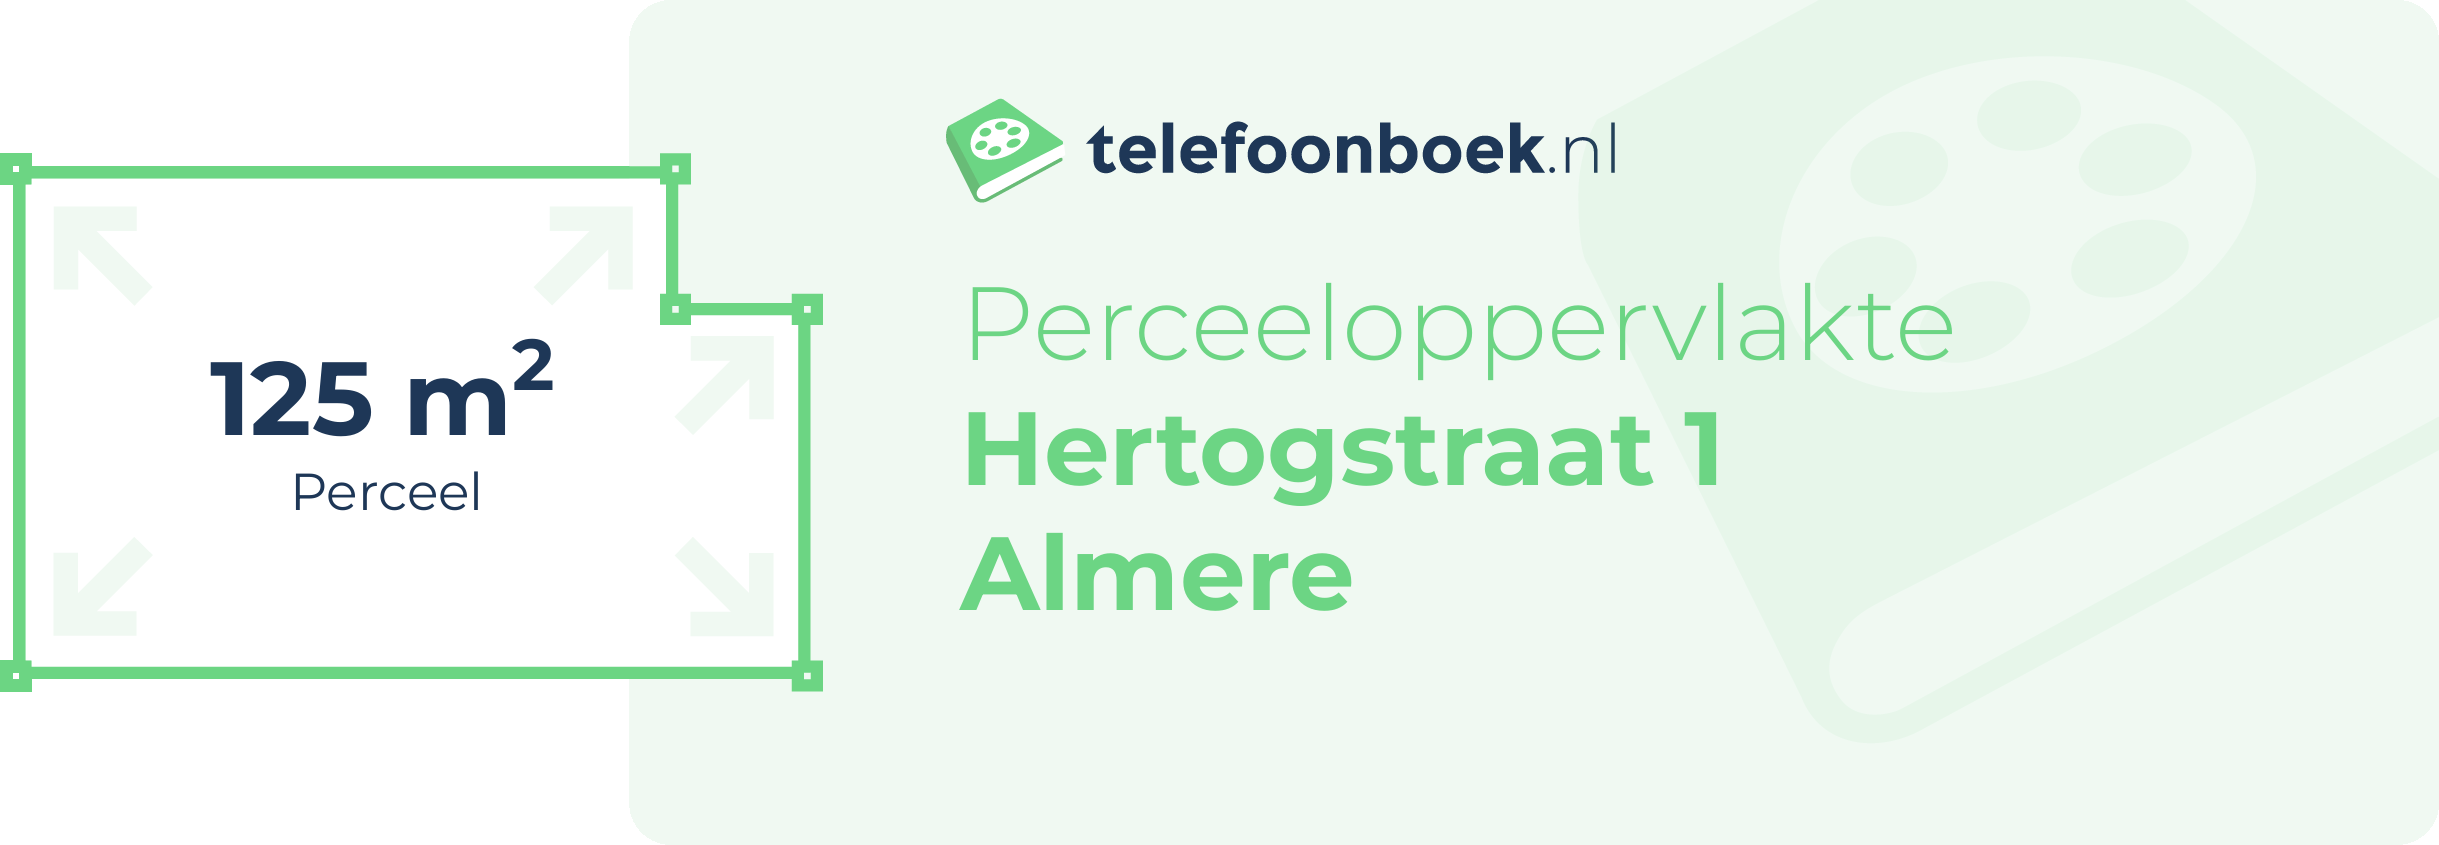 Perceeloppervlakte Hertogstraat 1 Almere